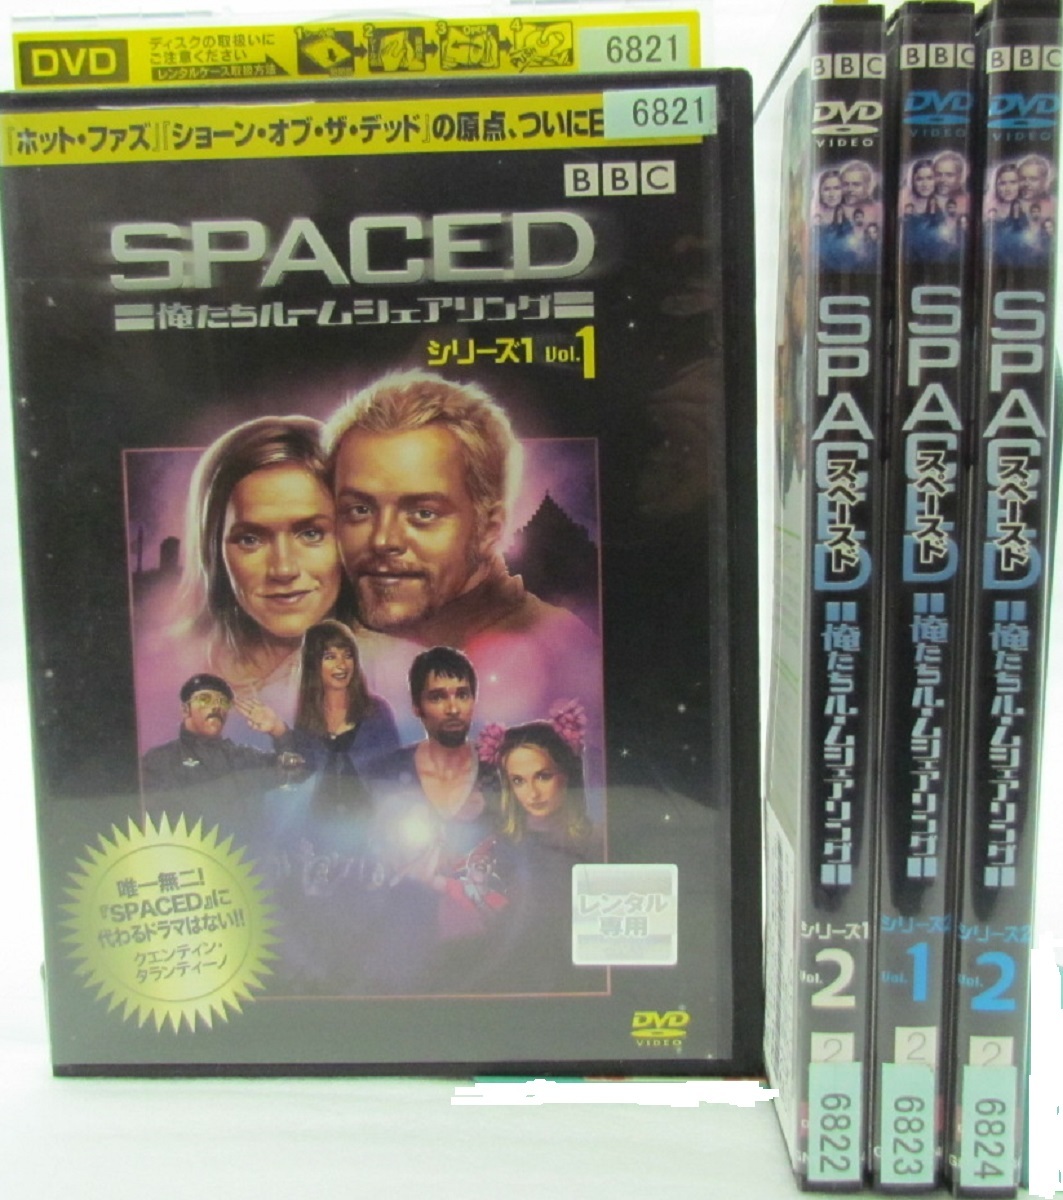 spaced 俺たちルームシェアリング DVD ciudadesincluyentes.org